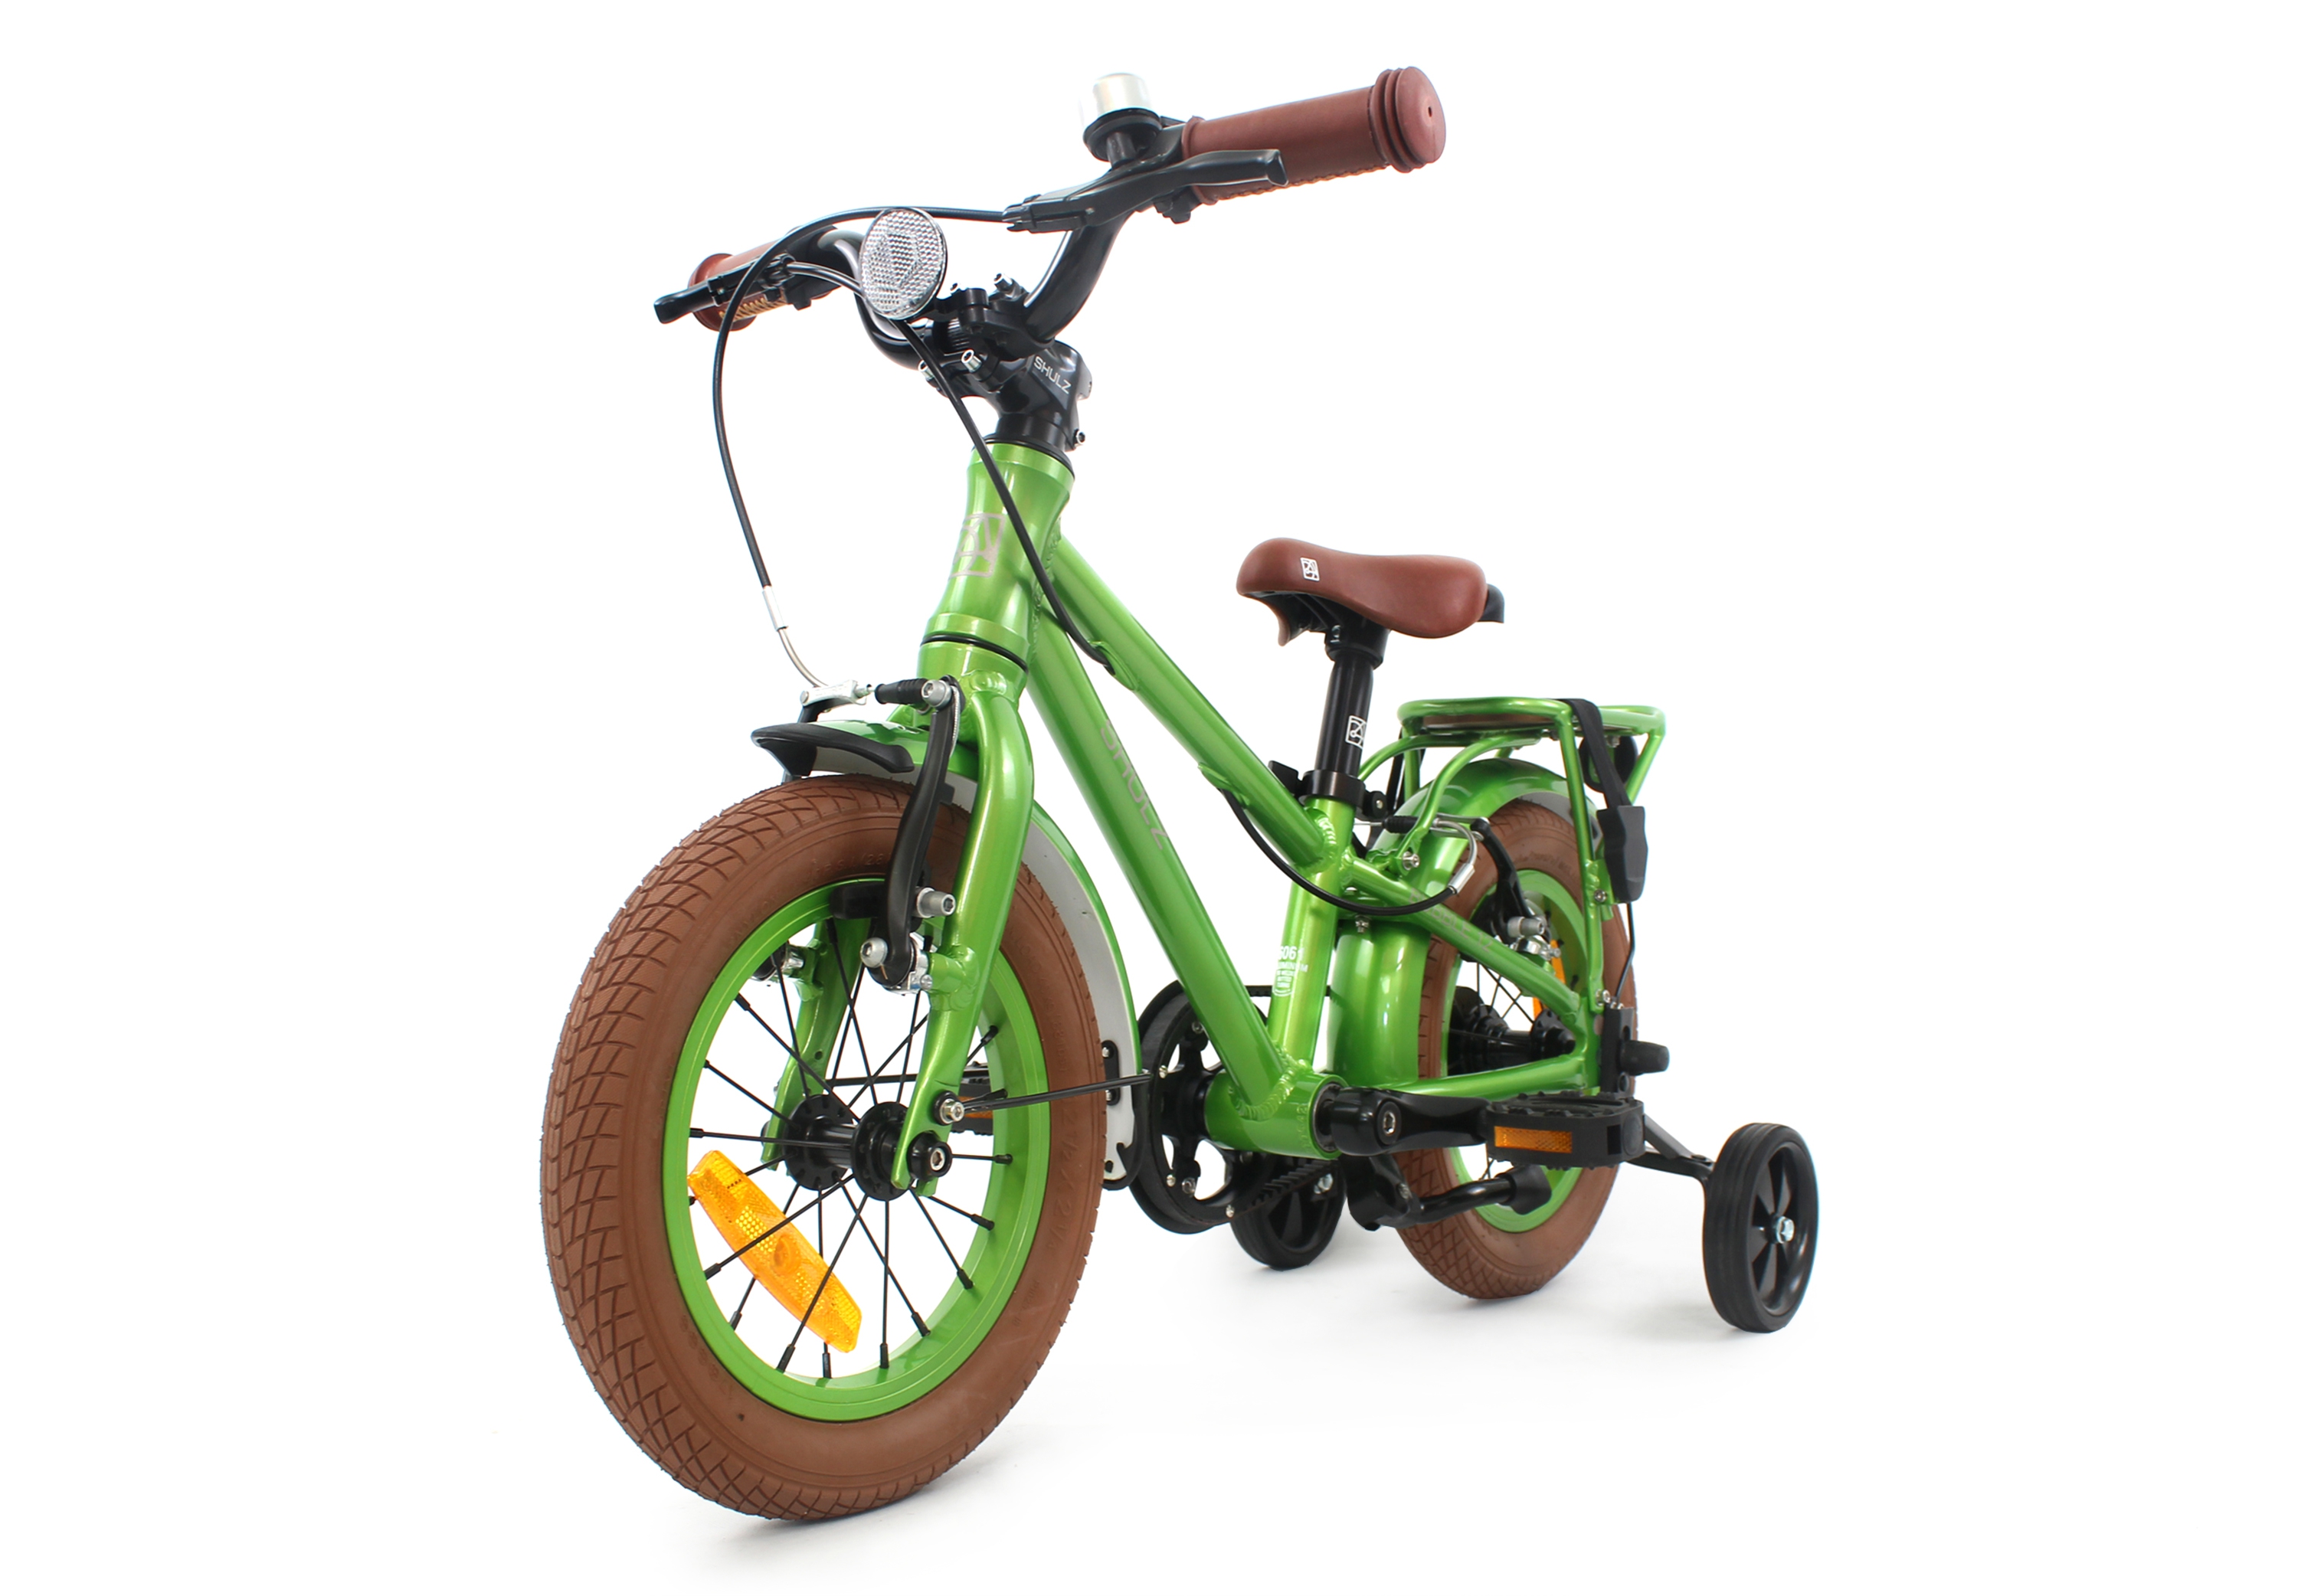 Велосипед Shulz Bubble 12 YS-7916 Green